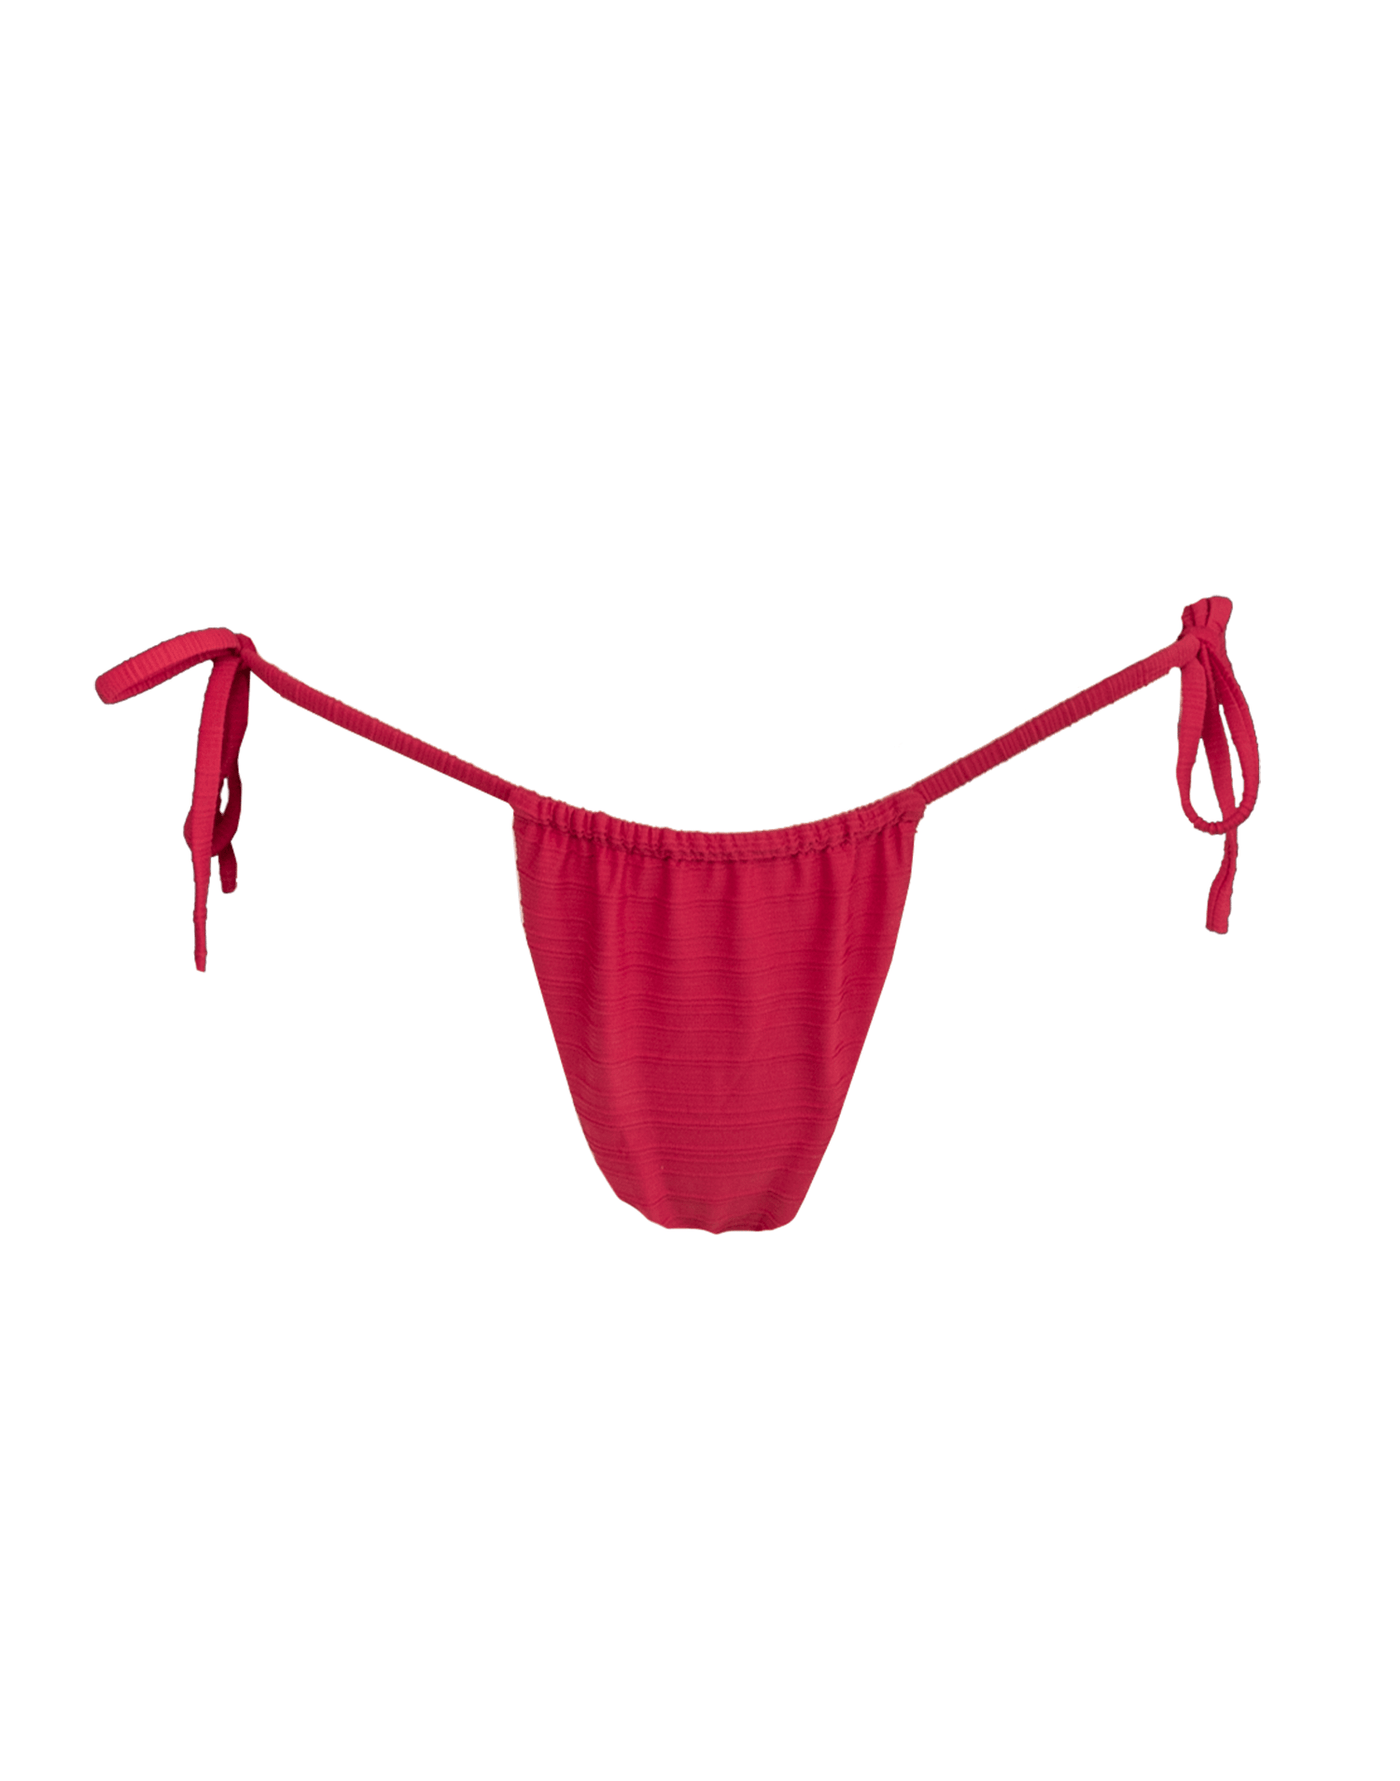 Quartz Side Tie Bottom (Pink) - Cheeky Side Tie Bikini Bottom - Women's Swim - Charcoal Clothing mix-and-match